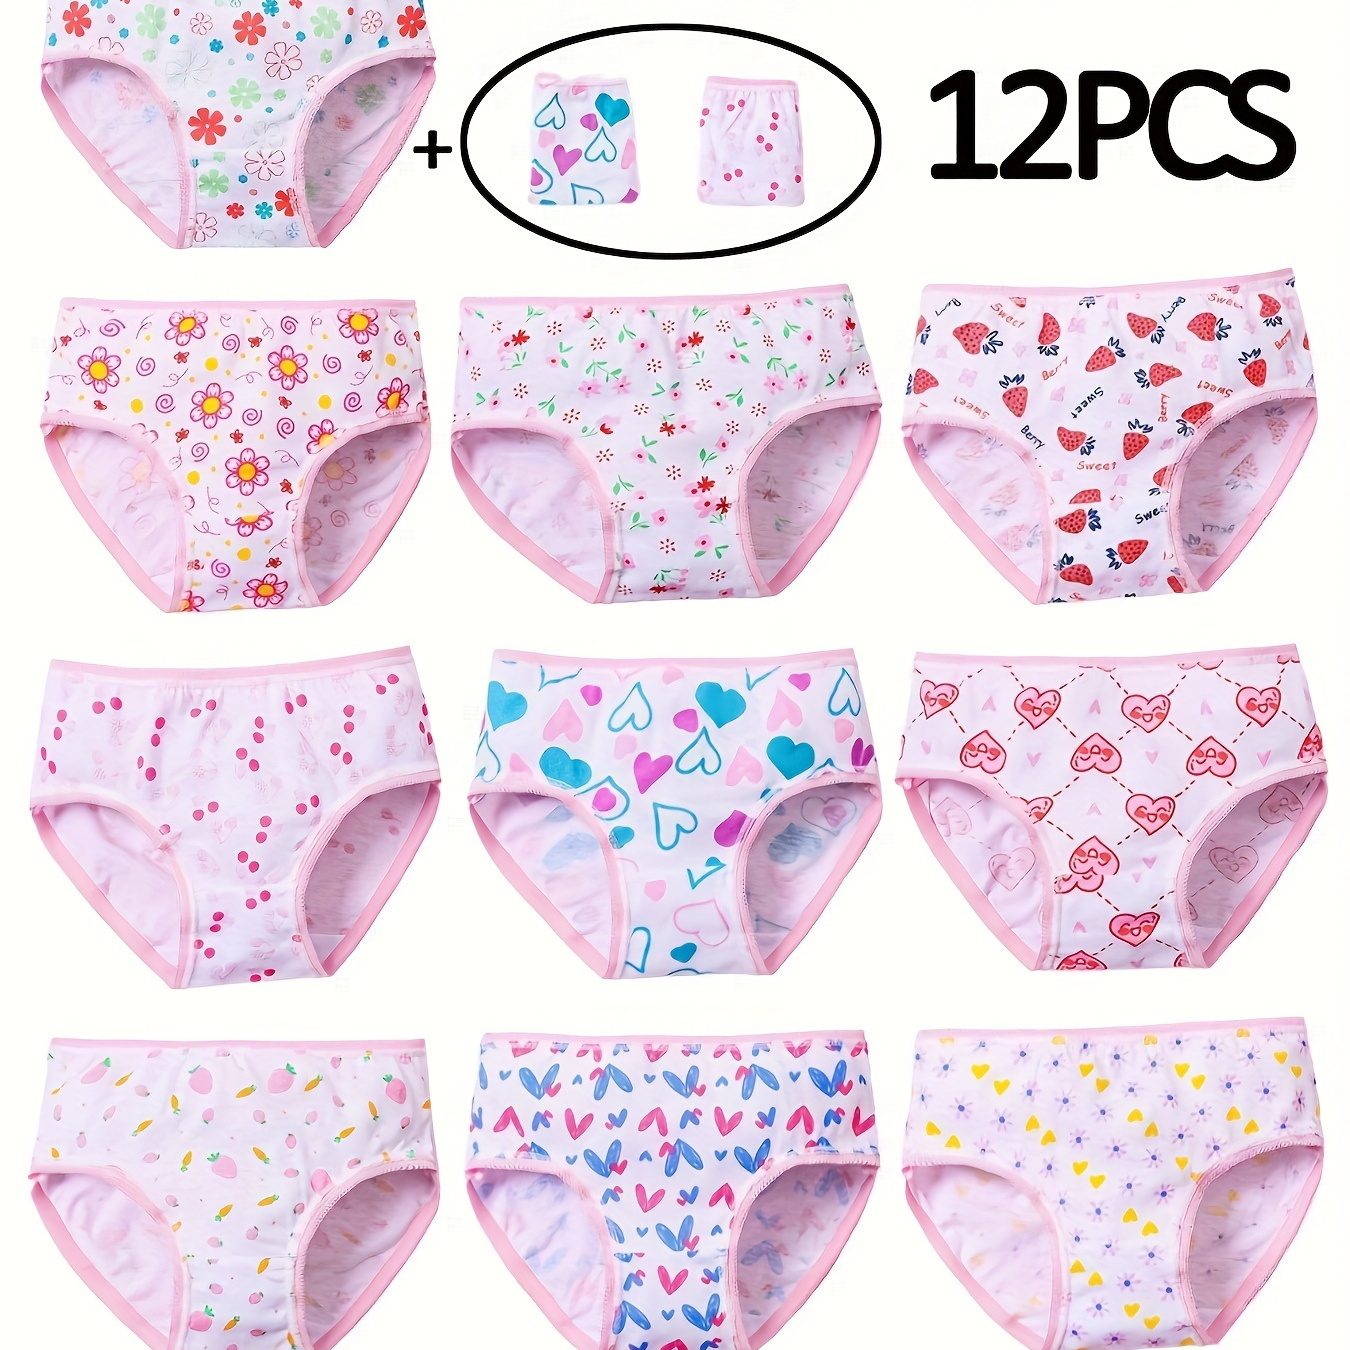 

12 Pcs Girl's Cute Flower & Heart Print Briefs, Soft & Comfy Cotton Underwear Set, For All Season Wearing